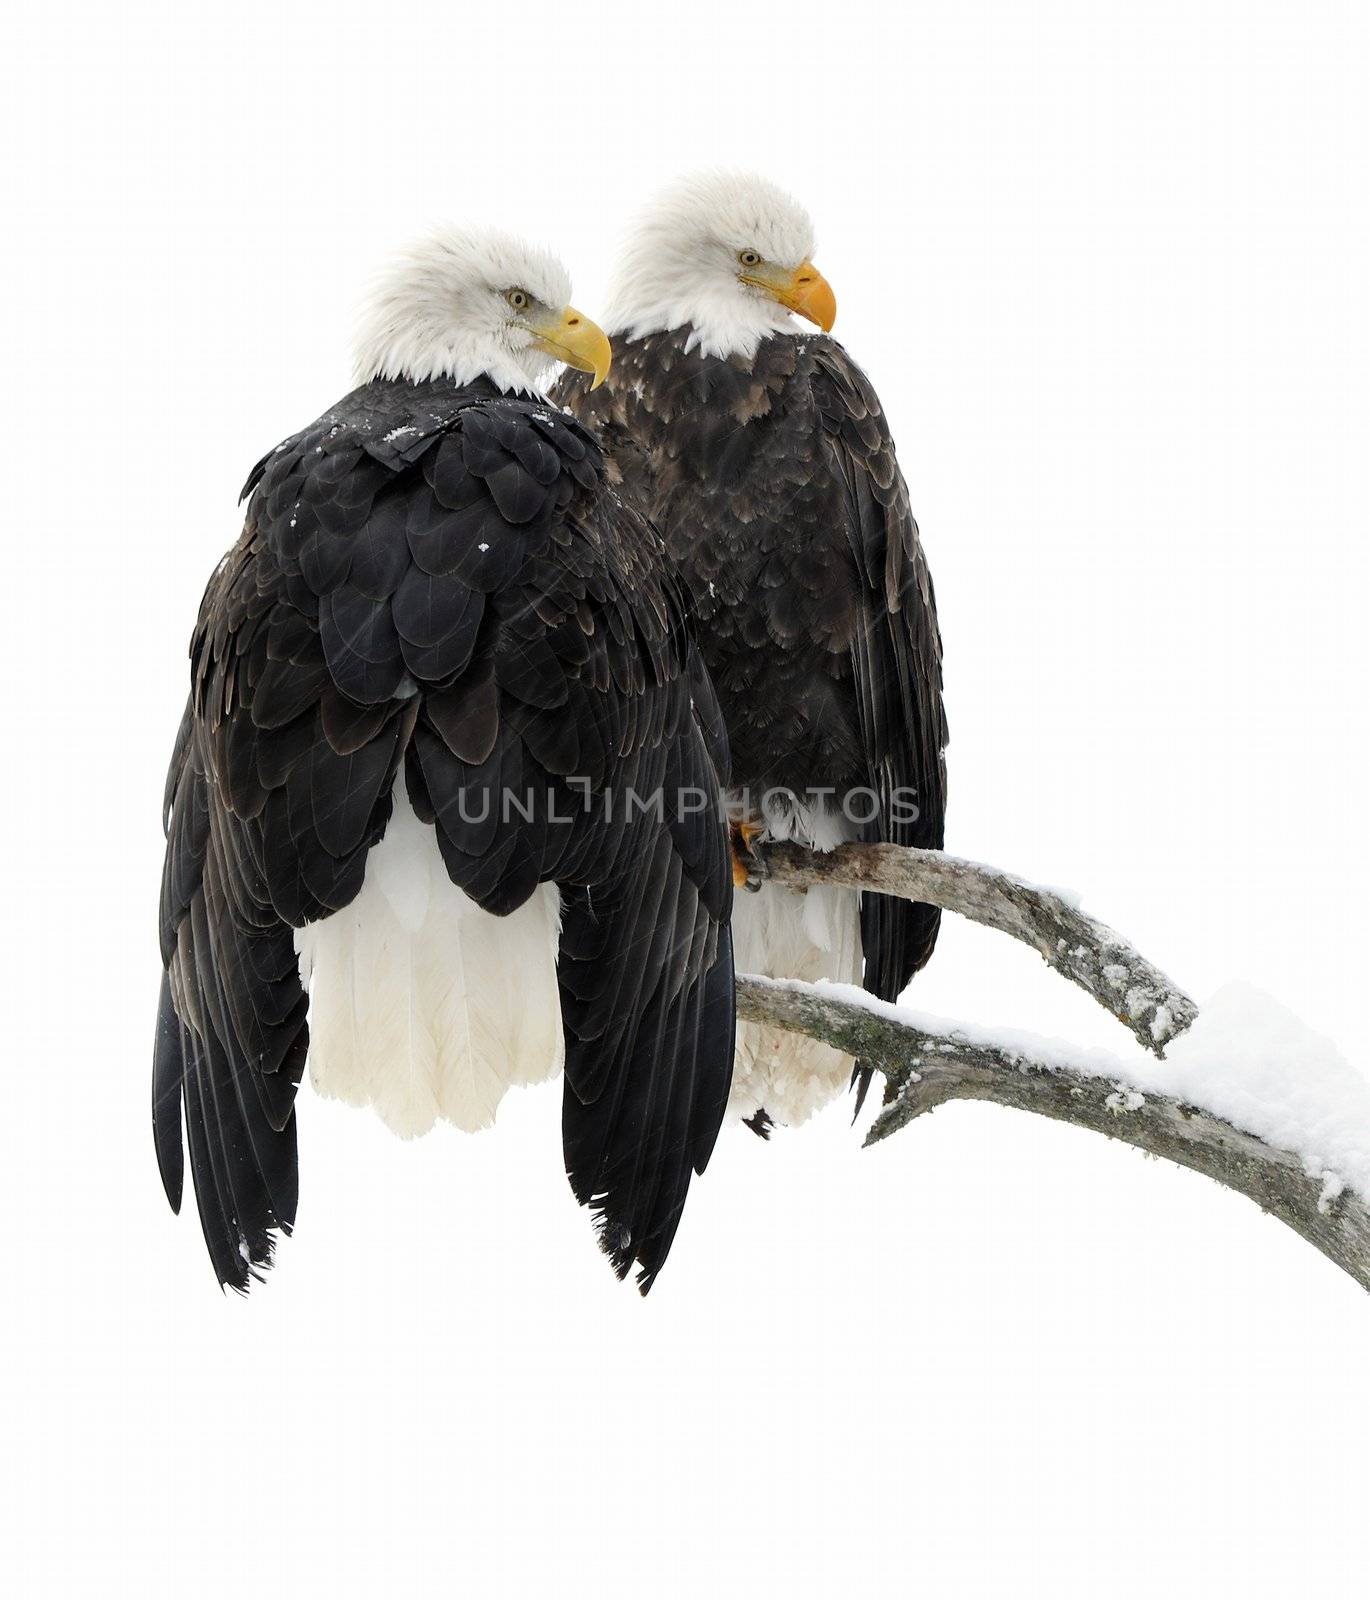 Two eagles ( Haliaeetus leucocephalus ) sit on the dried up tree